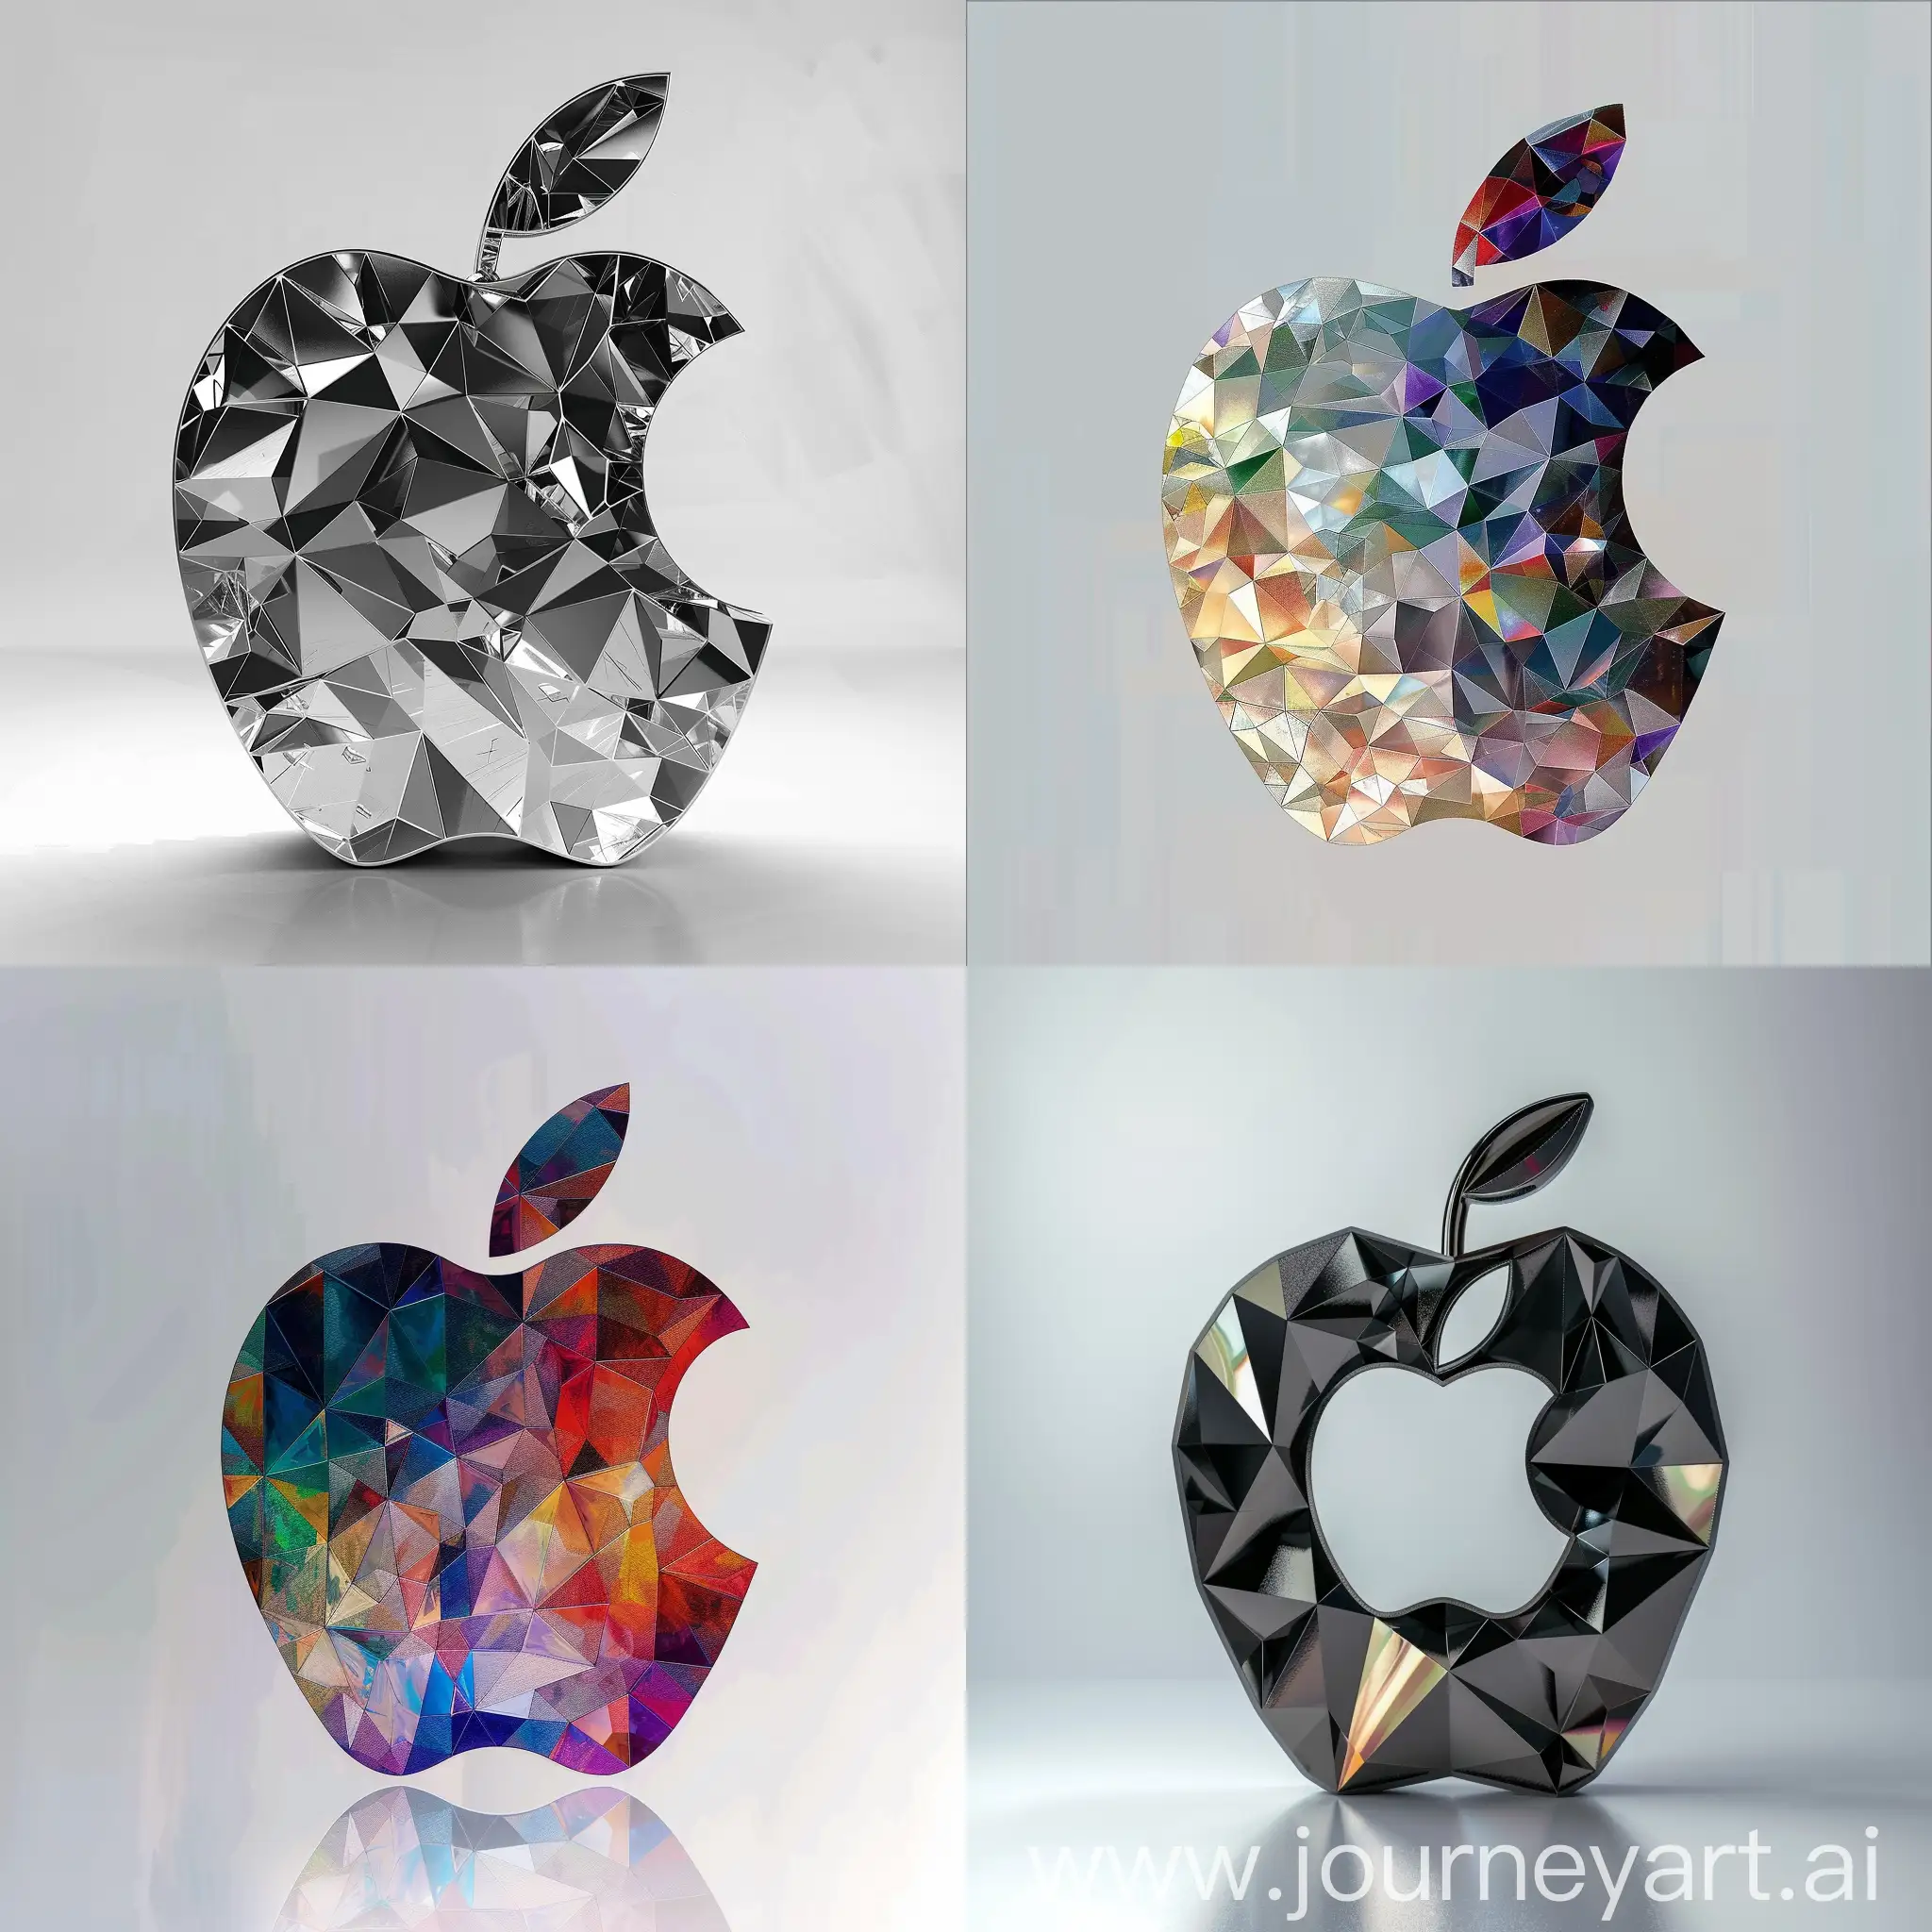 Geometric-Apple-Art-Vibrant-6Sided-Creation-in-11-Aspect-Ratio